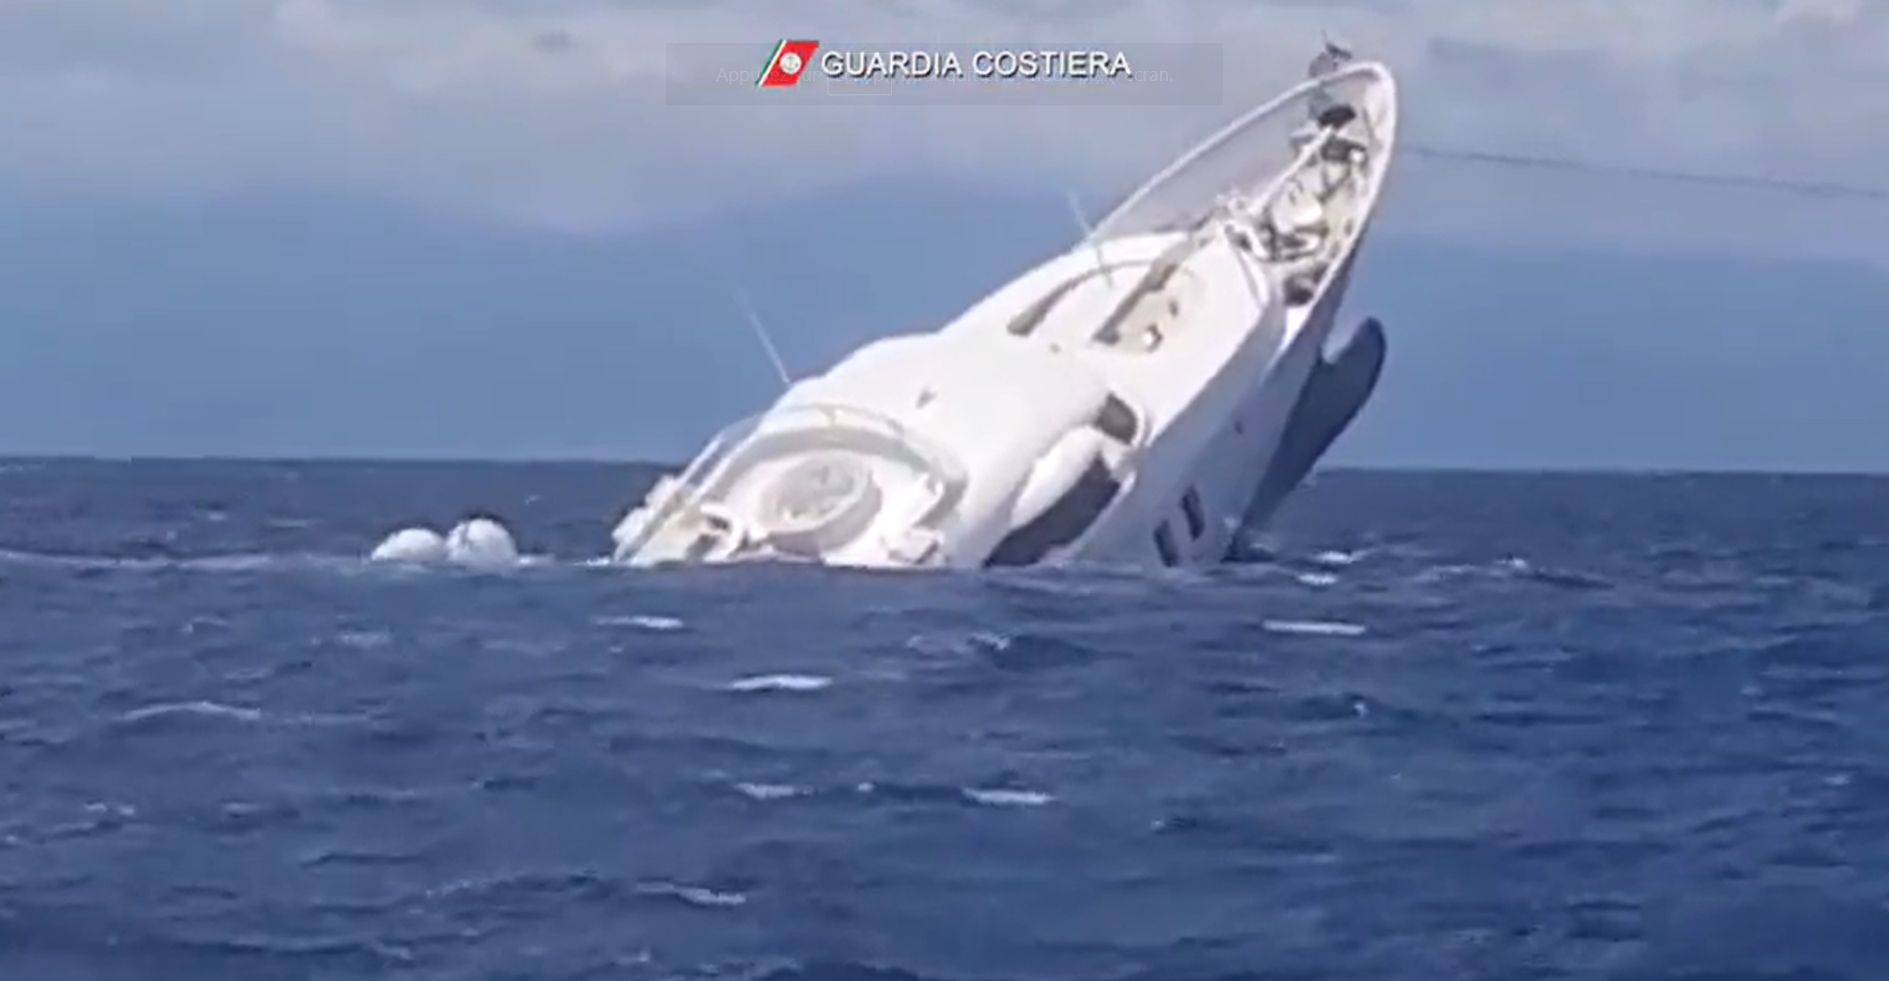 images impressionnantes naufrage super-yacht large Italie sombre eaux tempete Capture Twitter Guardia costiera Plare